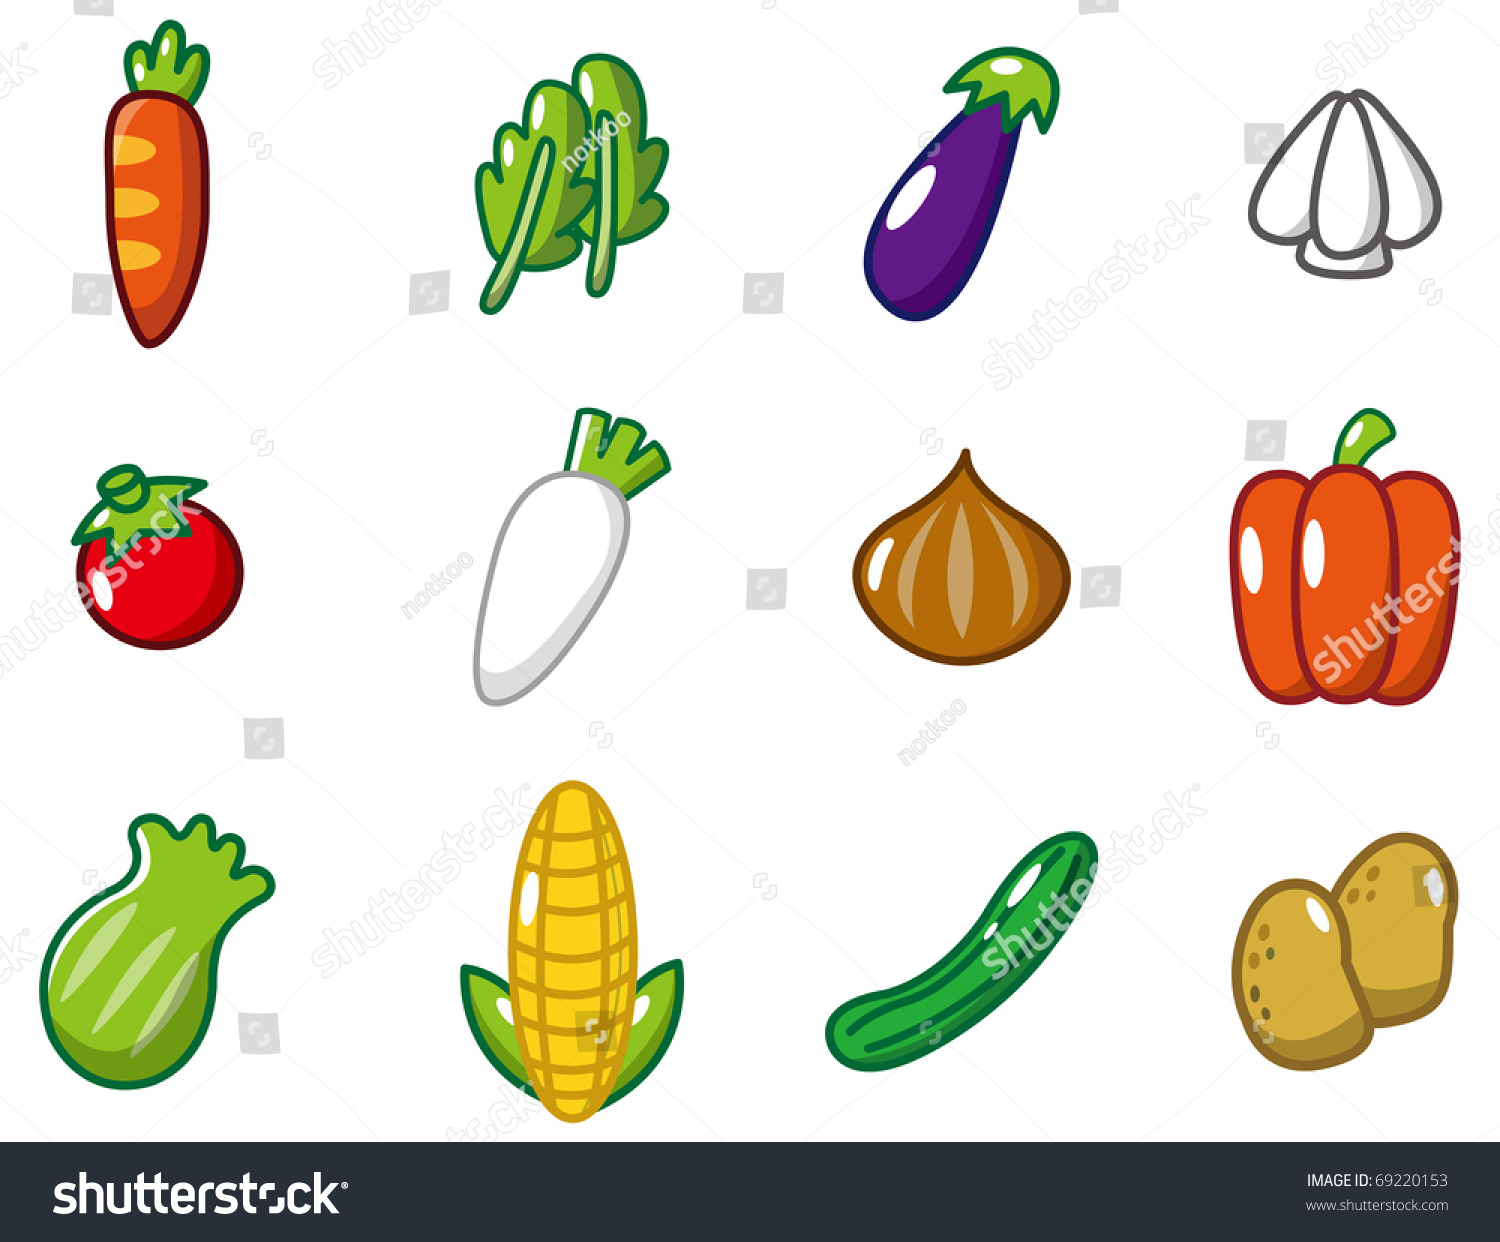 cartoon clipart of vegetables - photo #36